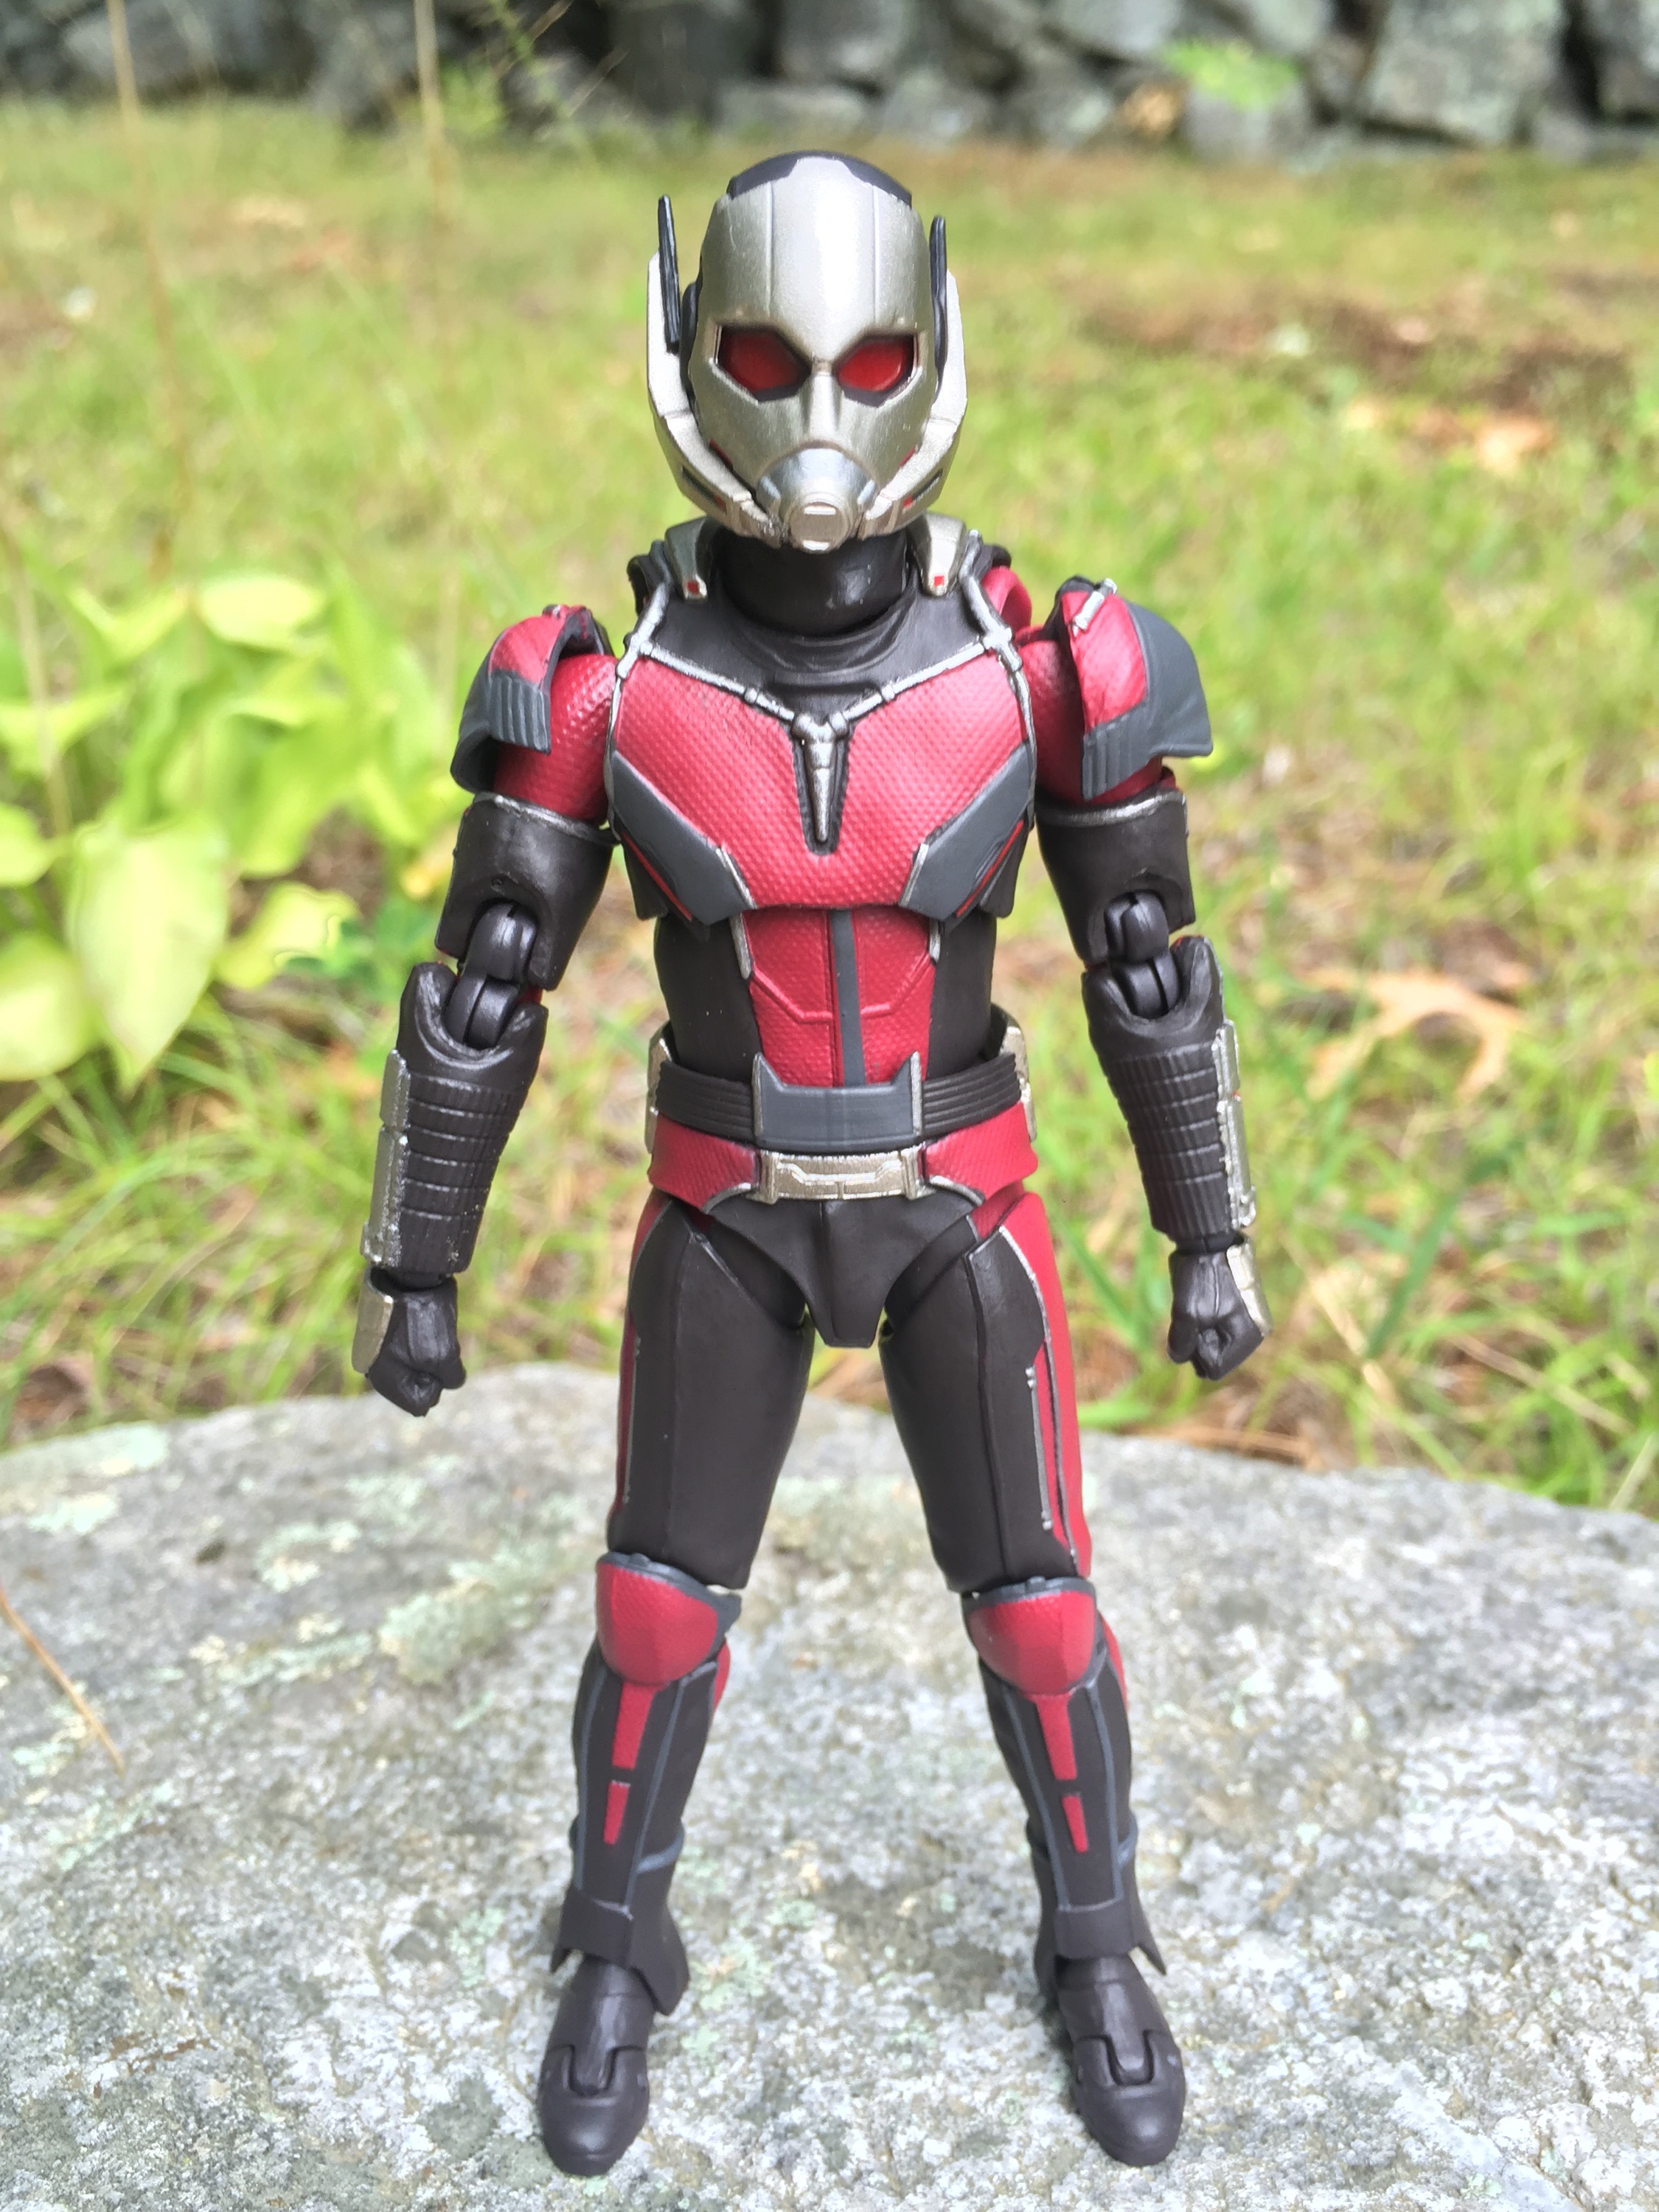 S.H.Figuarts SHF Marvel Captain America Civil War Ant-Man Action Figure New